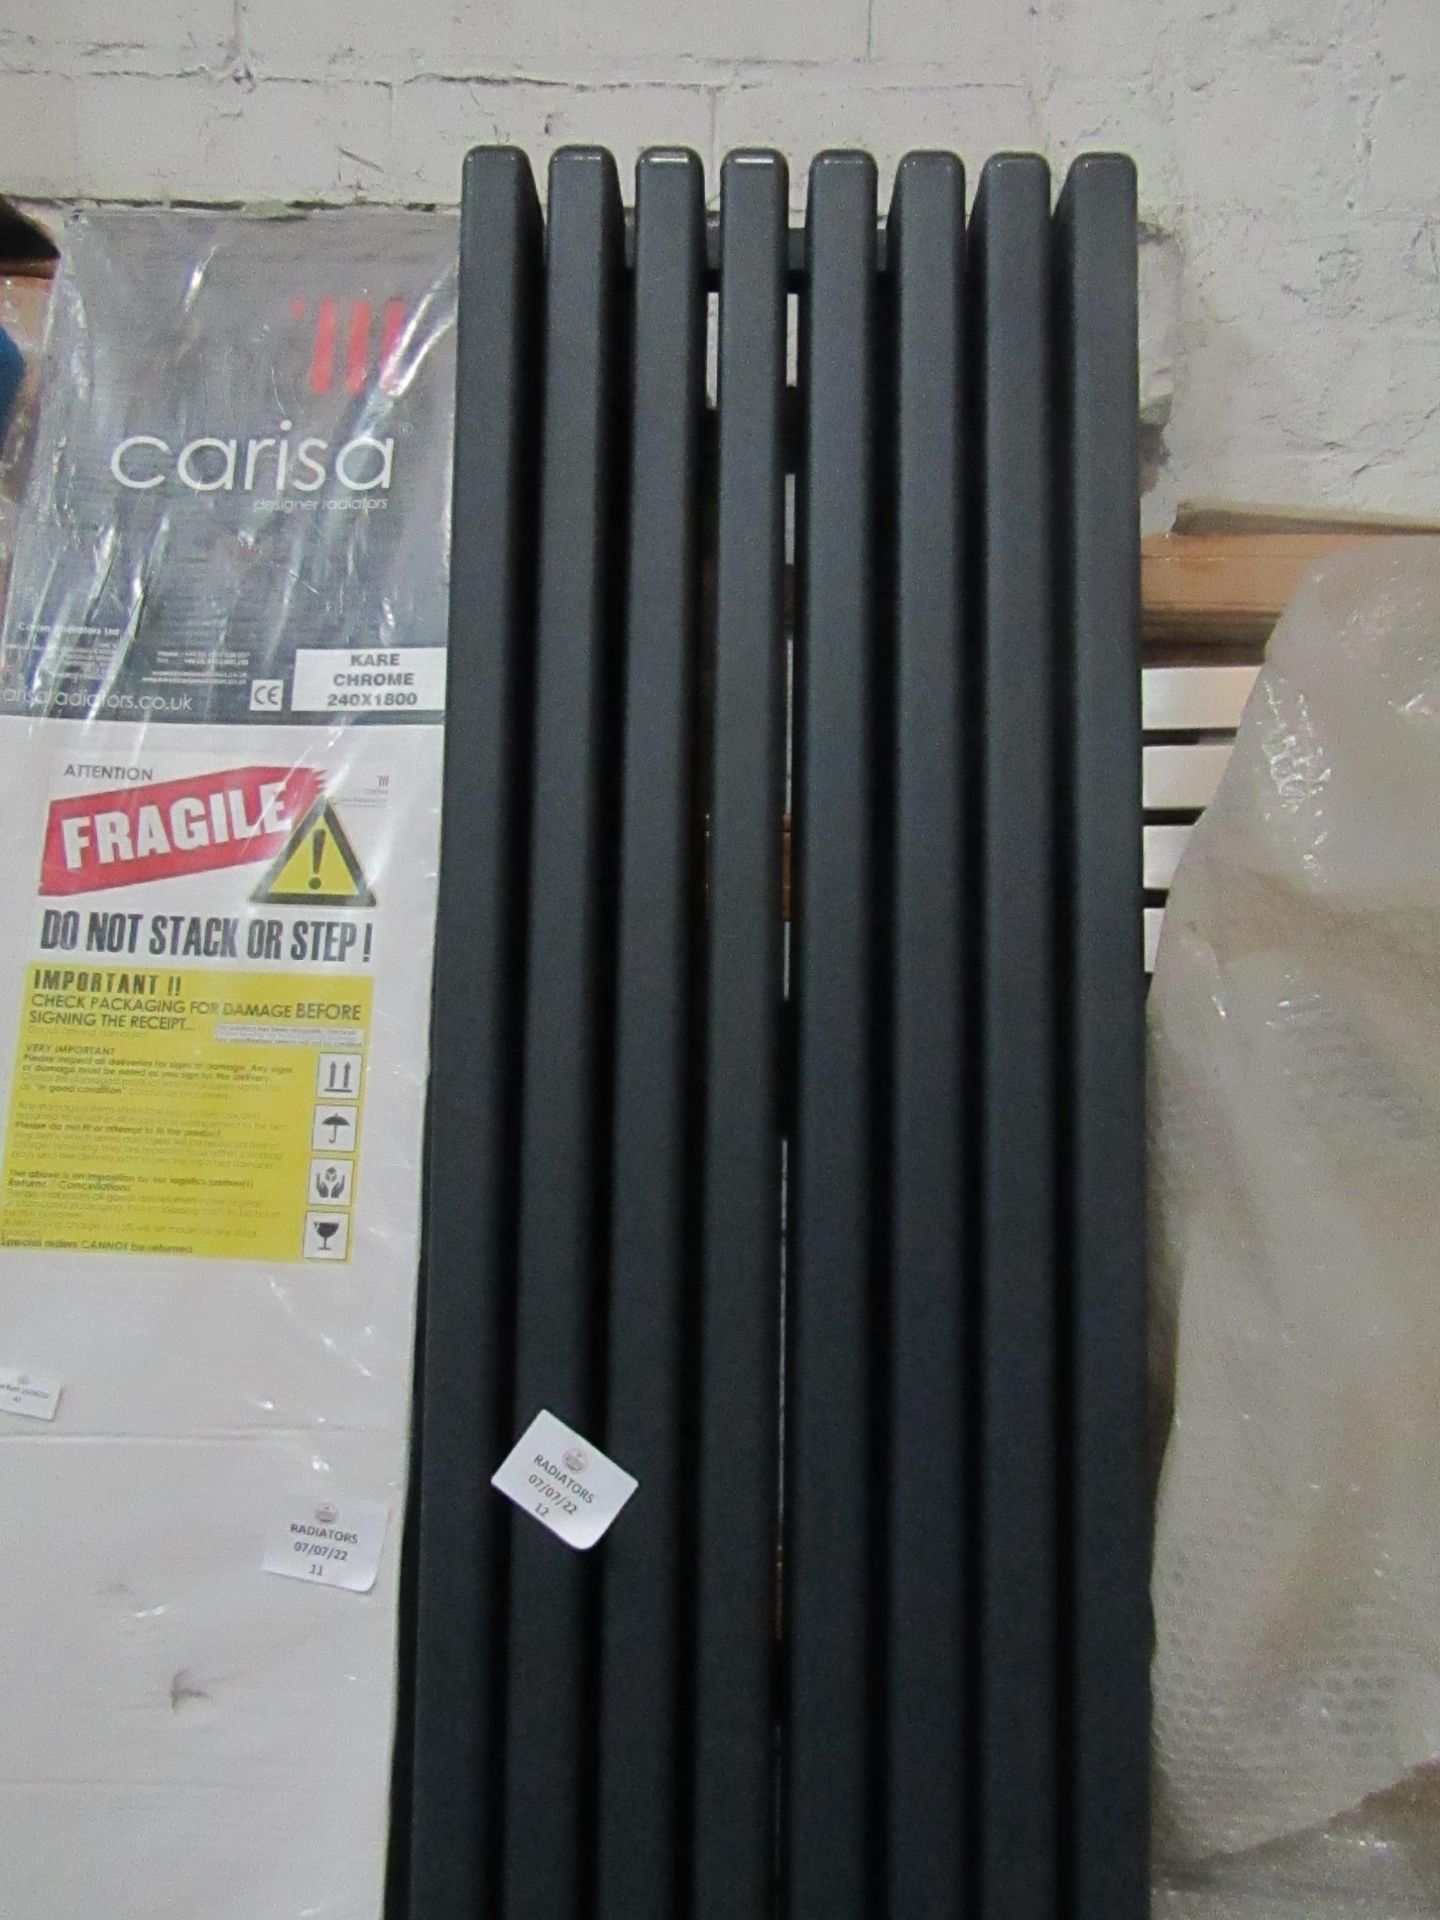 Carisa - karo radiator - 1800x340mm - Item Is Missing Wall Brackets & Has Some Very Minor Marks